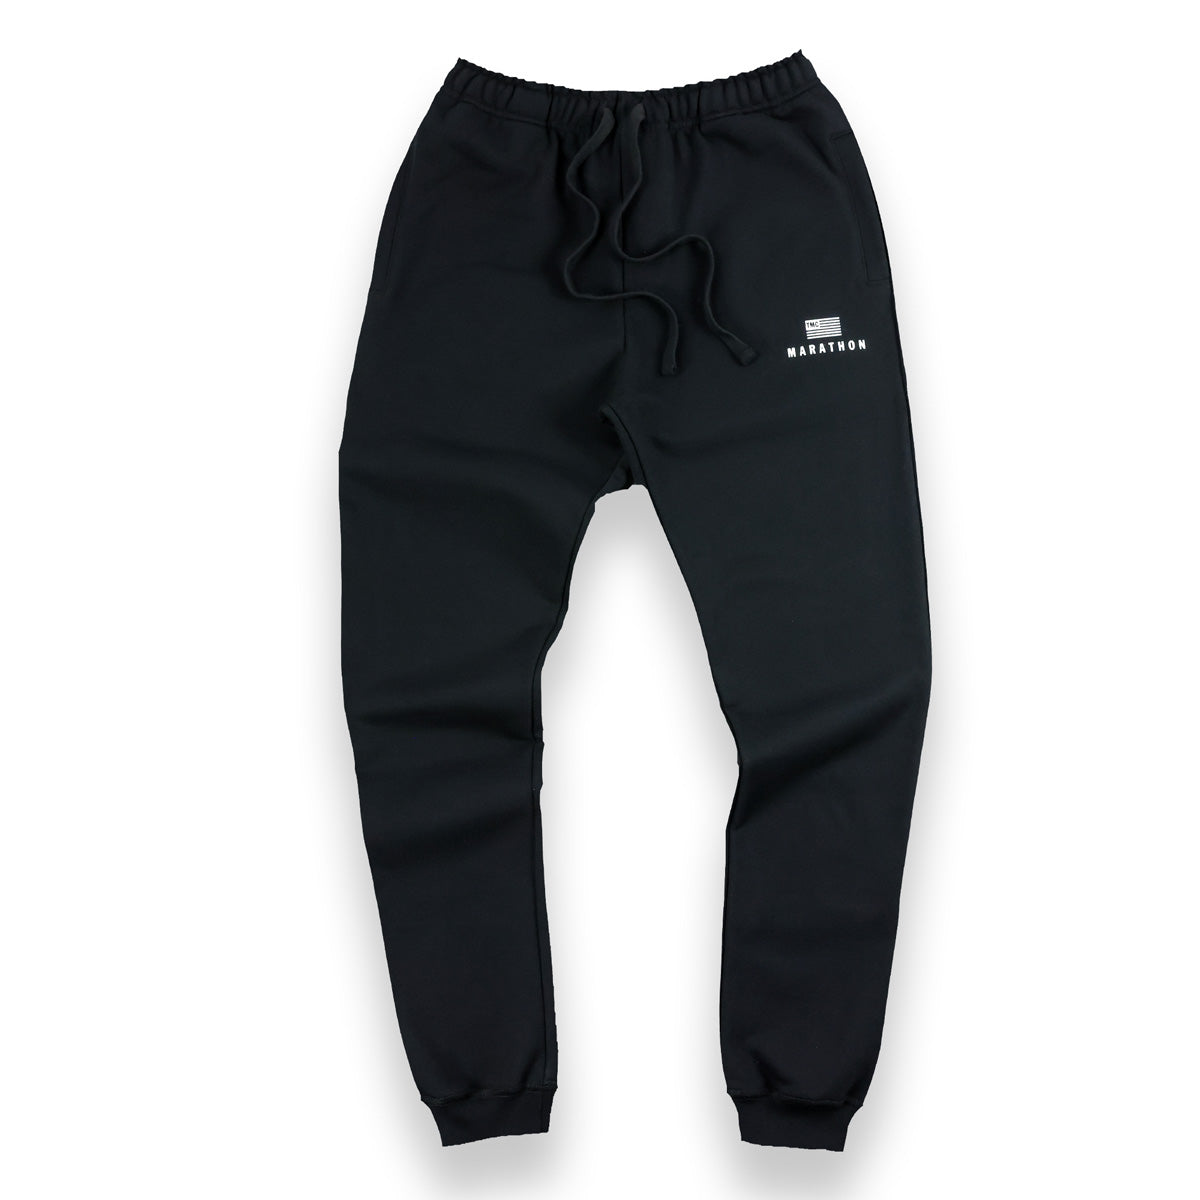 Marathon Modern Sweatpants - Black/White - Front